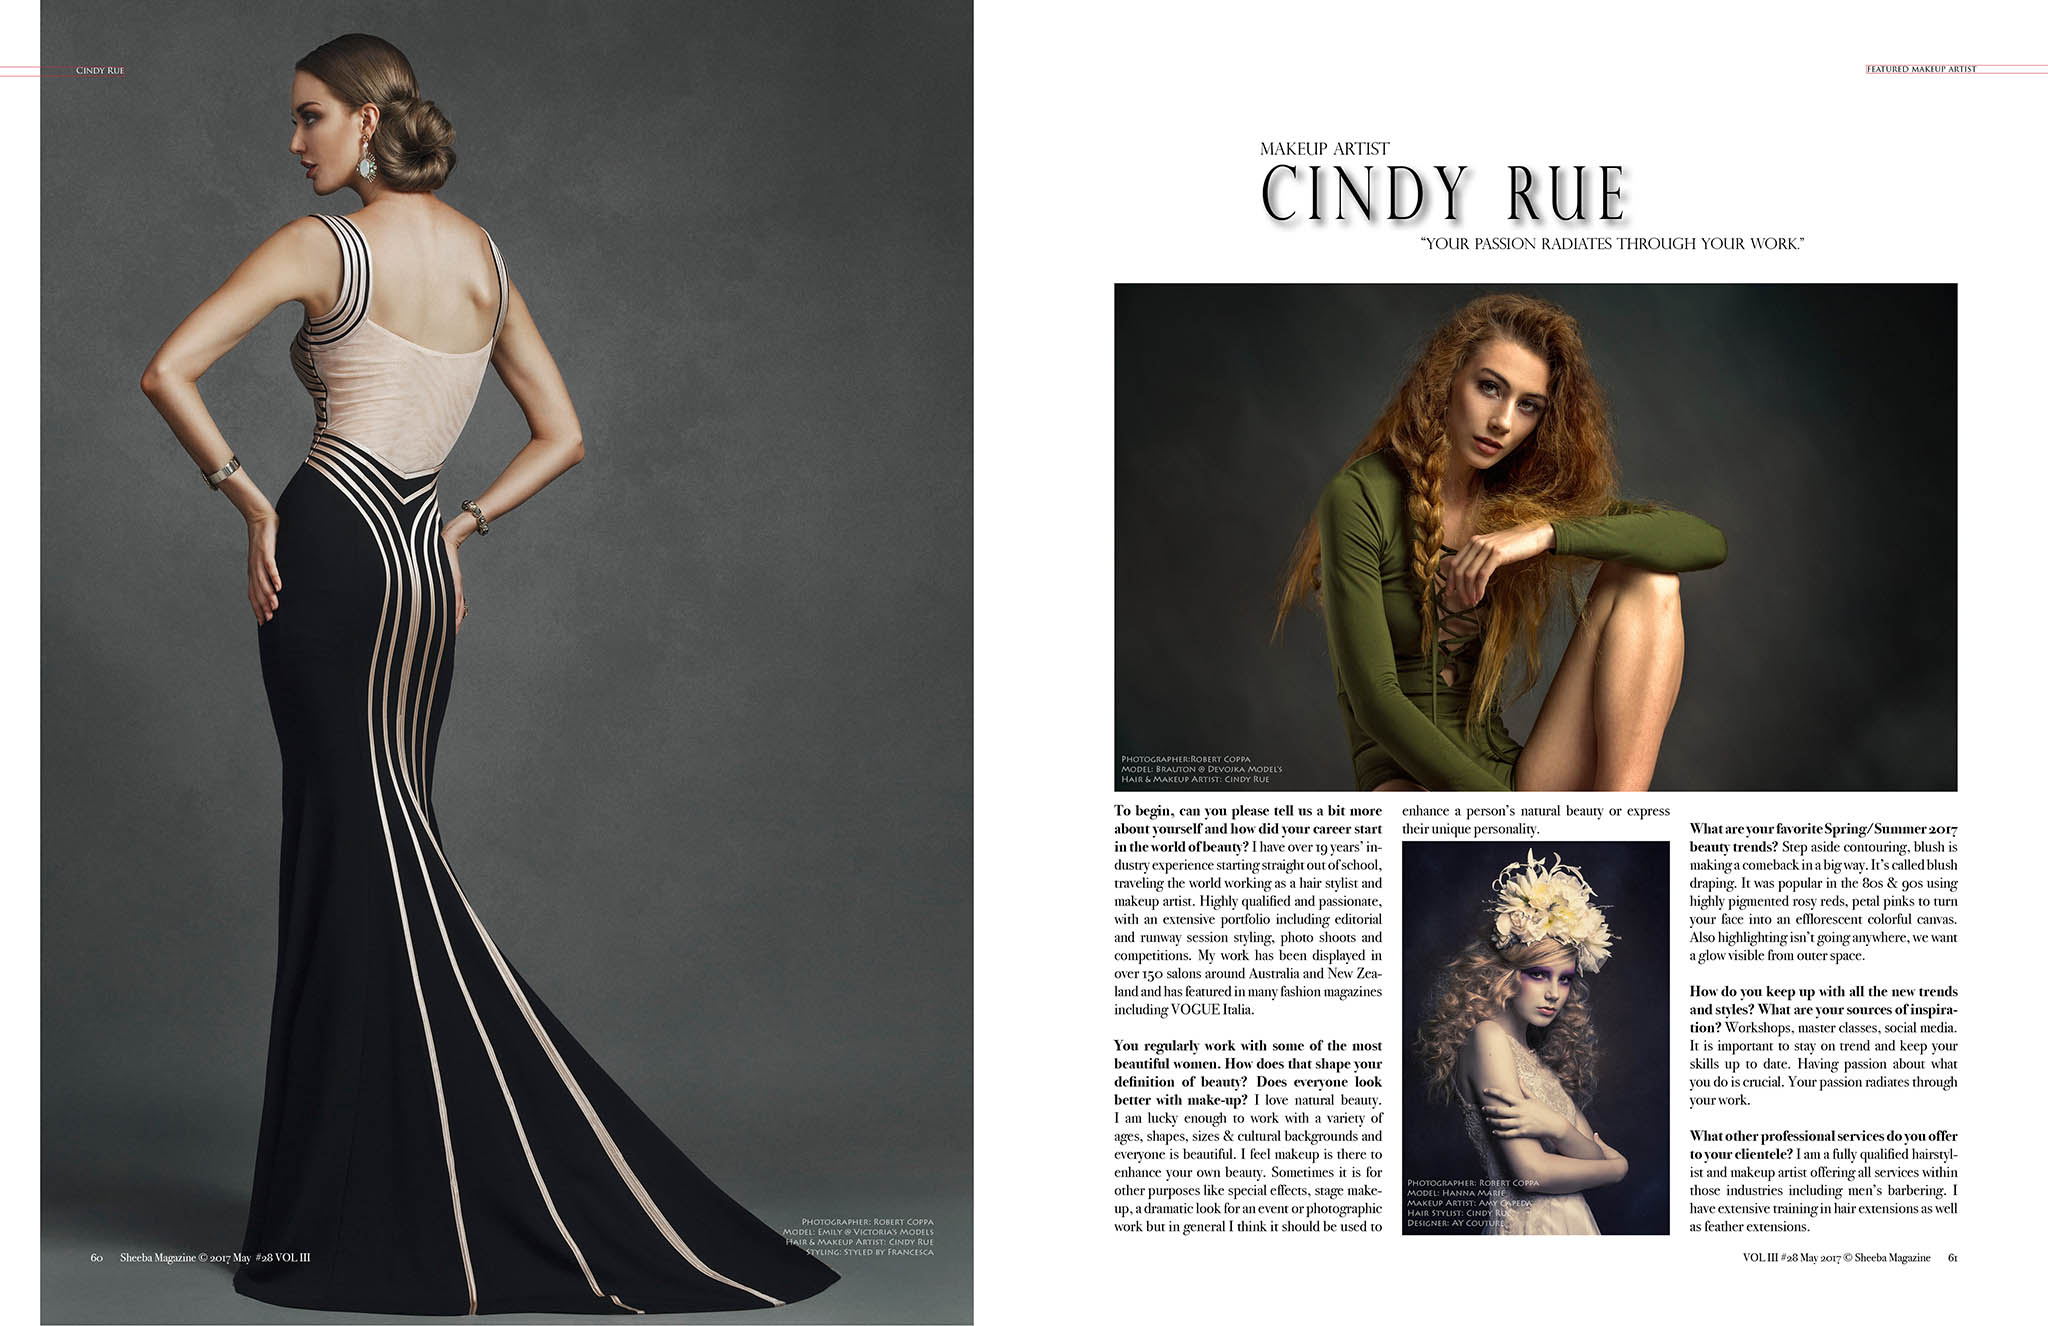 interview with makeup artist Cindy Rue